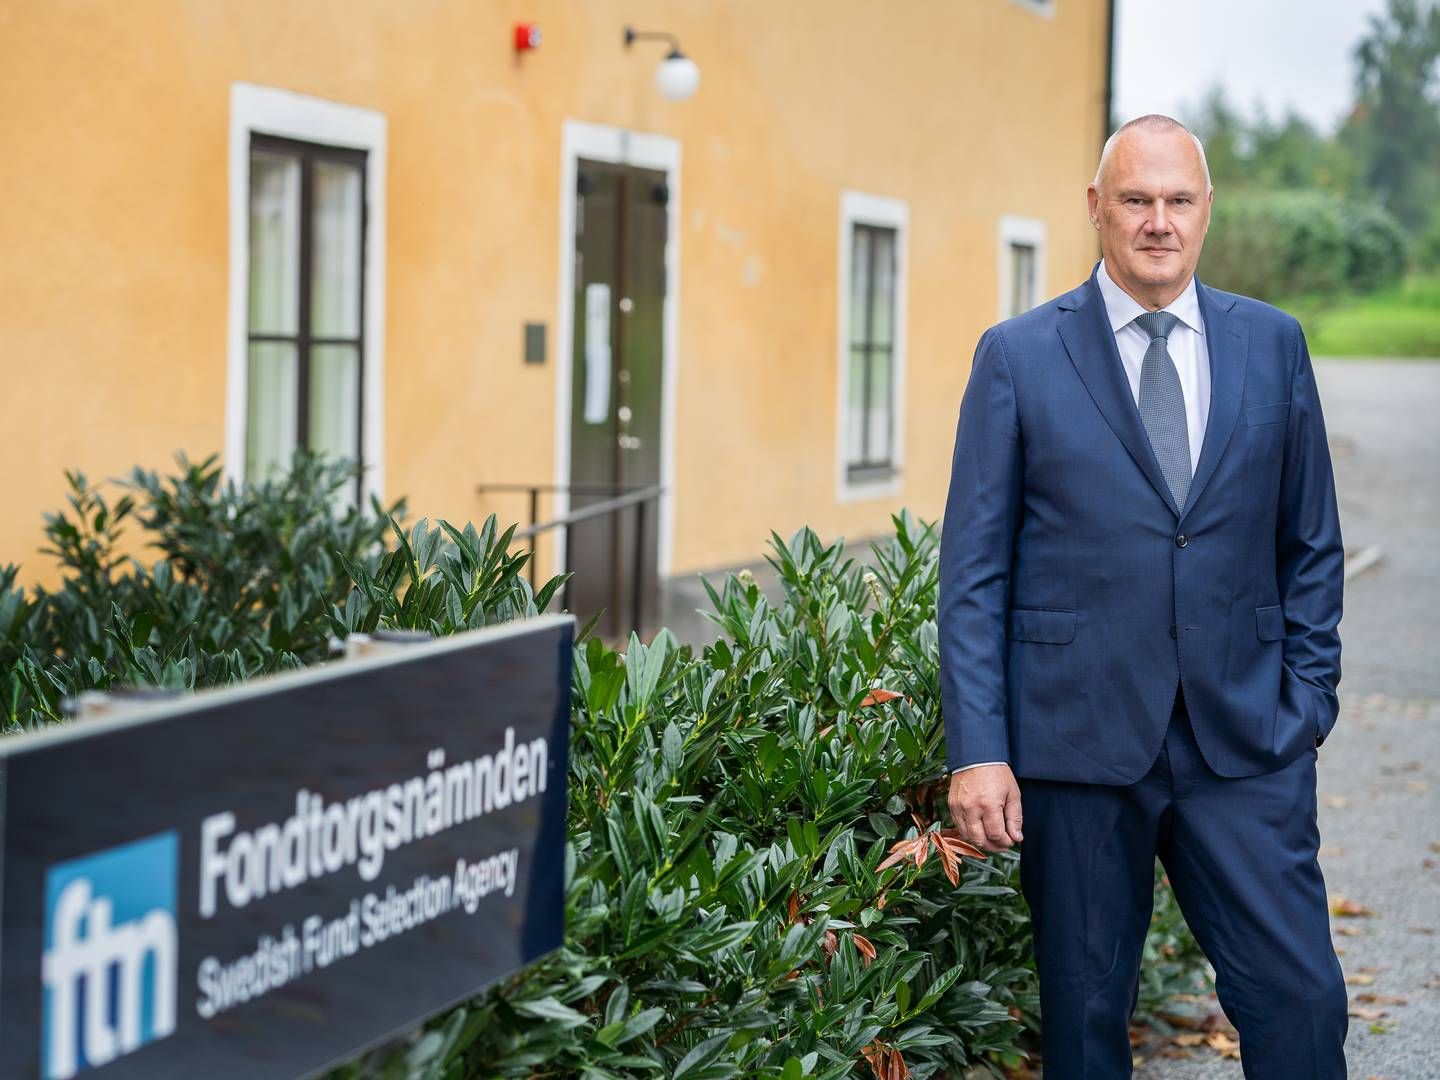 Erik Fransson is the executive director of FTN. | Photo: Fondtorgsnämnden / PR